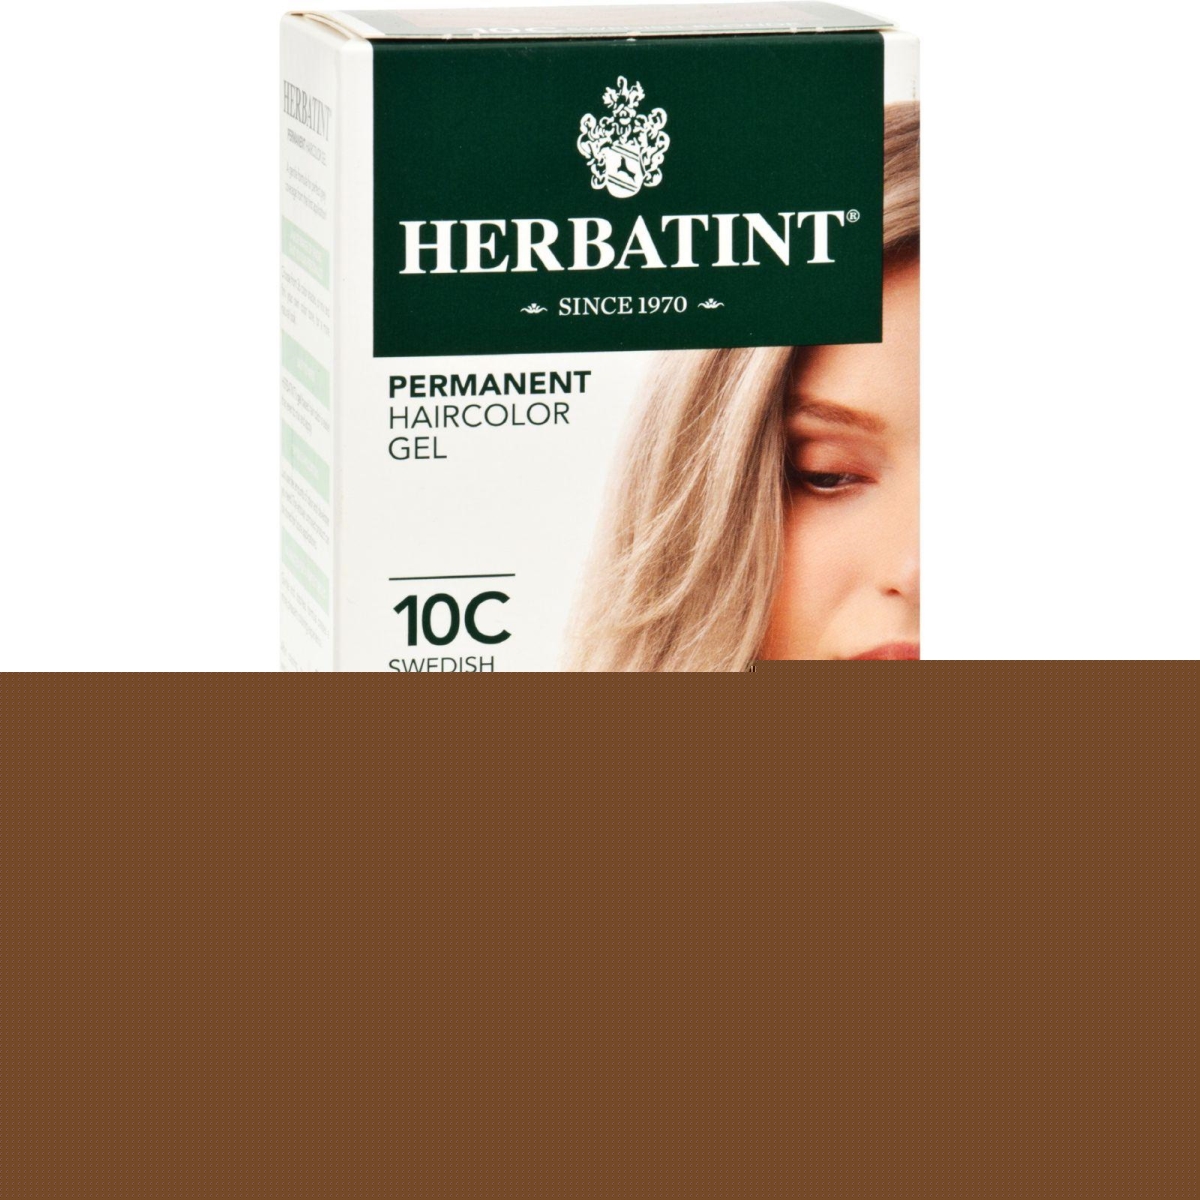 Picture of Herbatint HG0226993 Haircolor Kit Ash - Swedish Blonde 10c